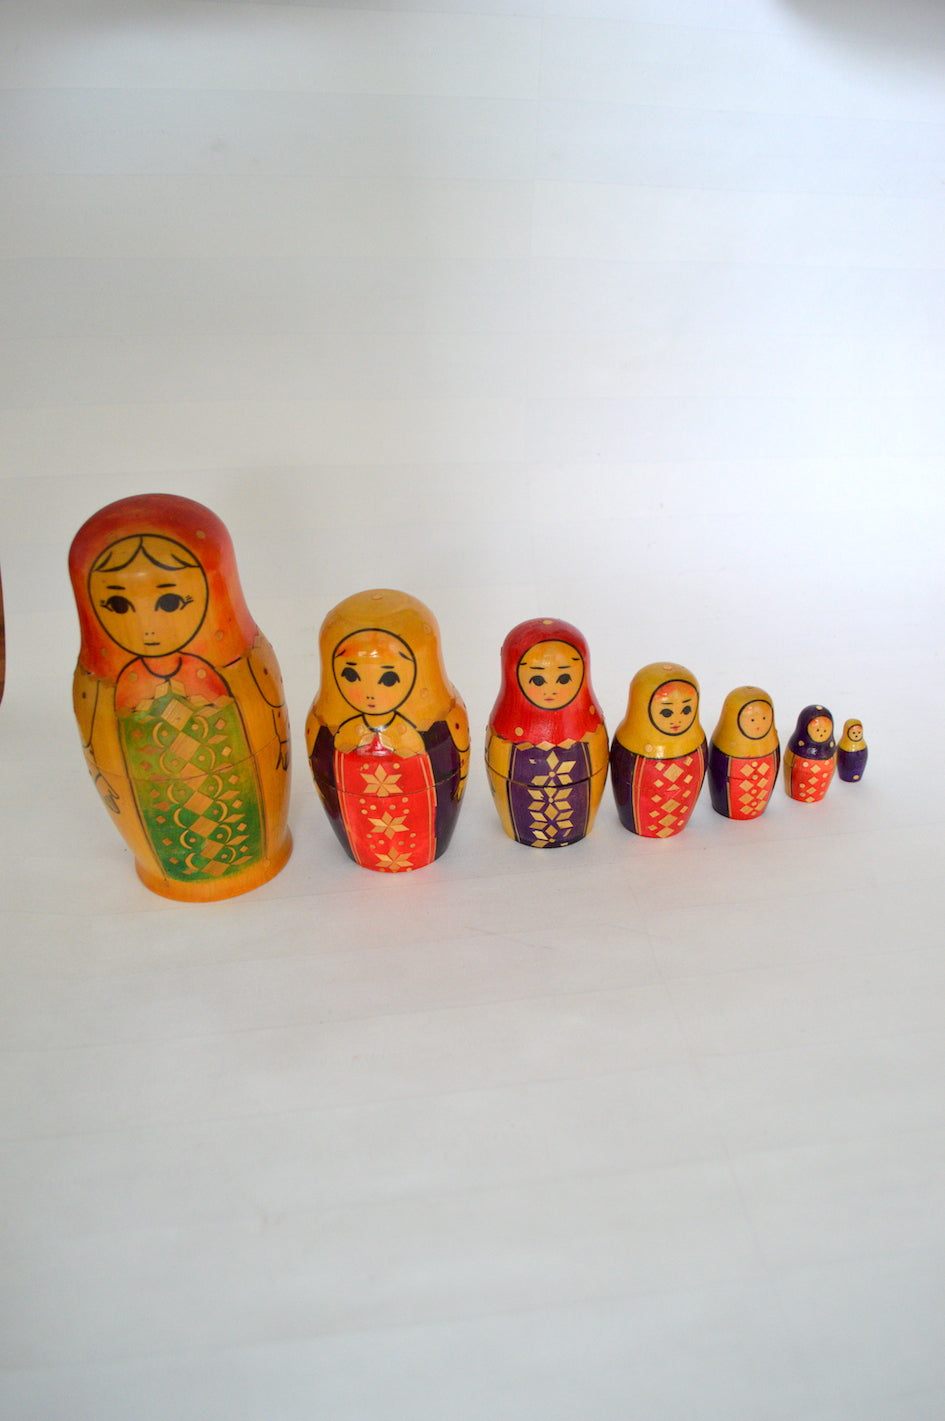 Matriochkas poupées russes